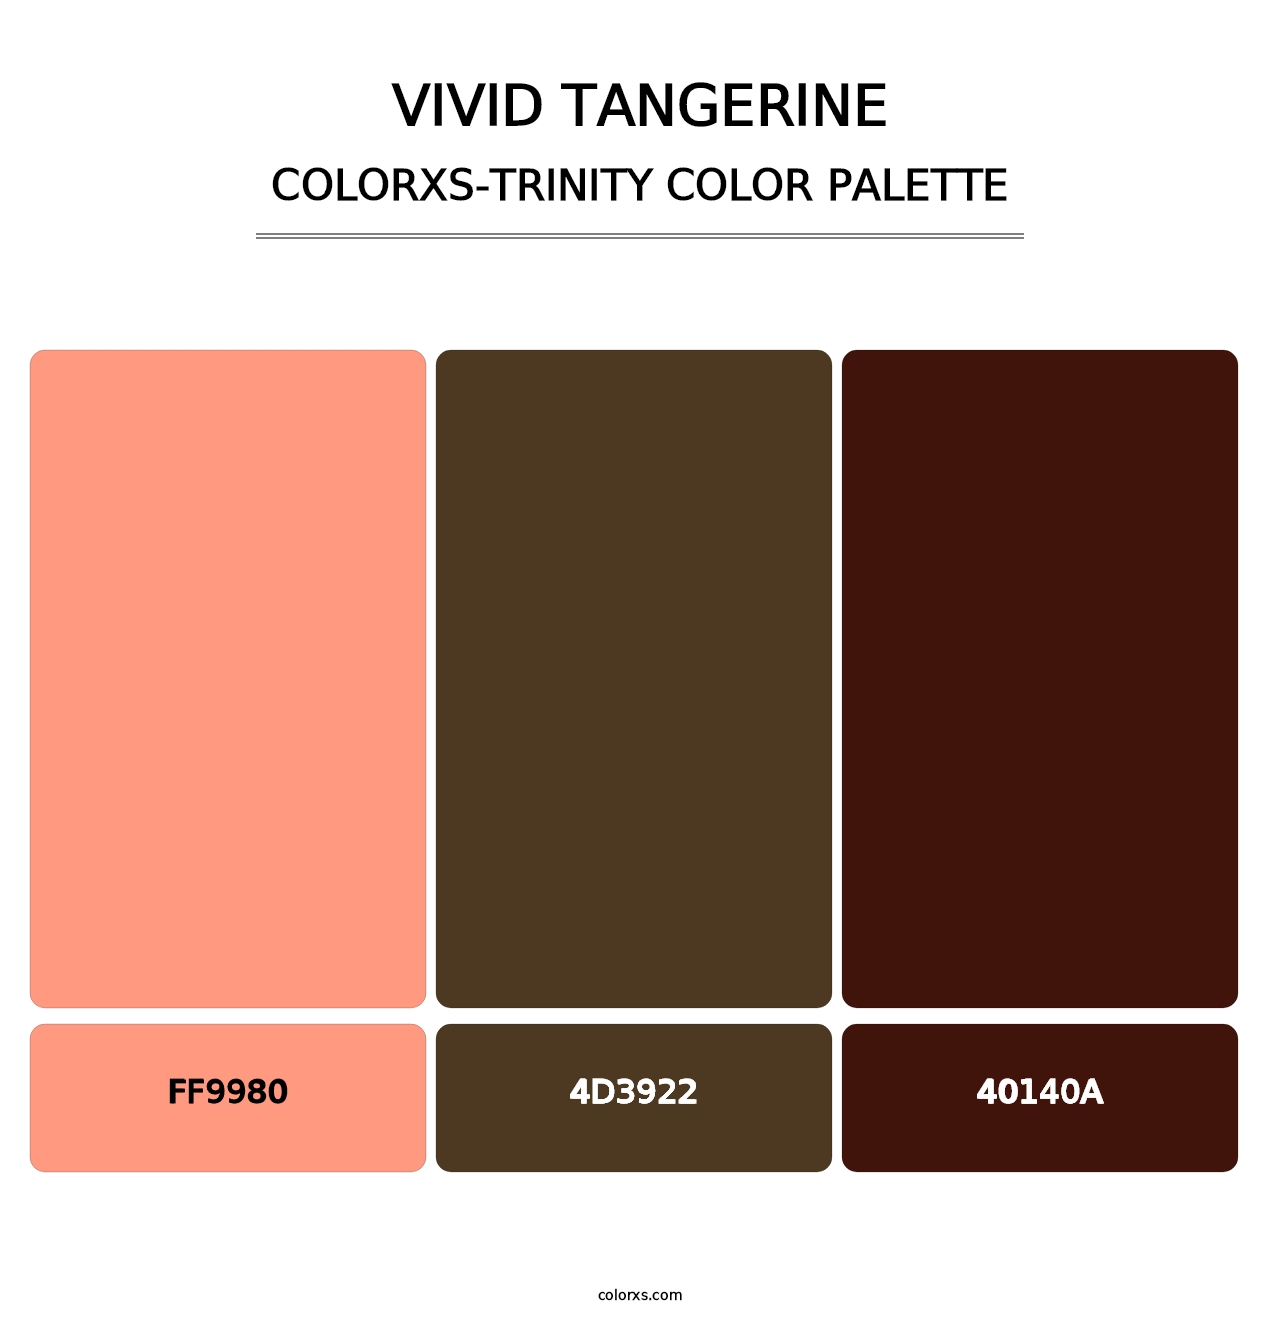 Vivid Tangerine - Colorxs Trinity Palette